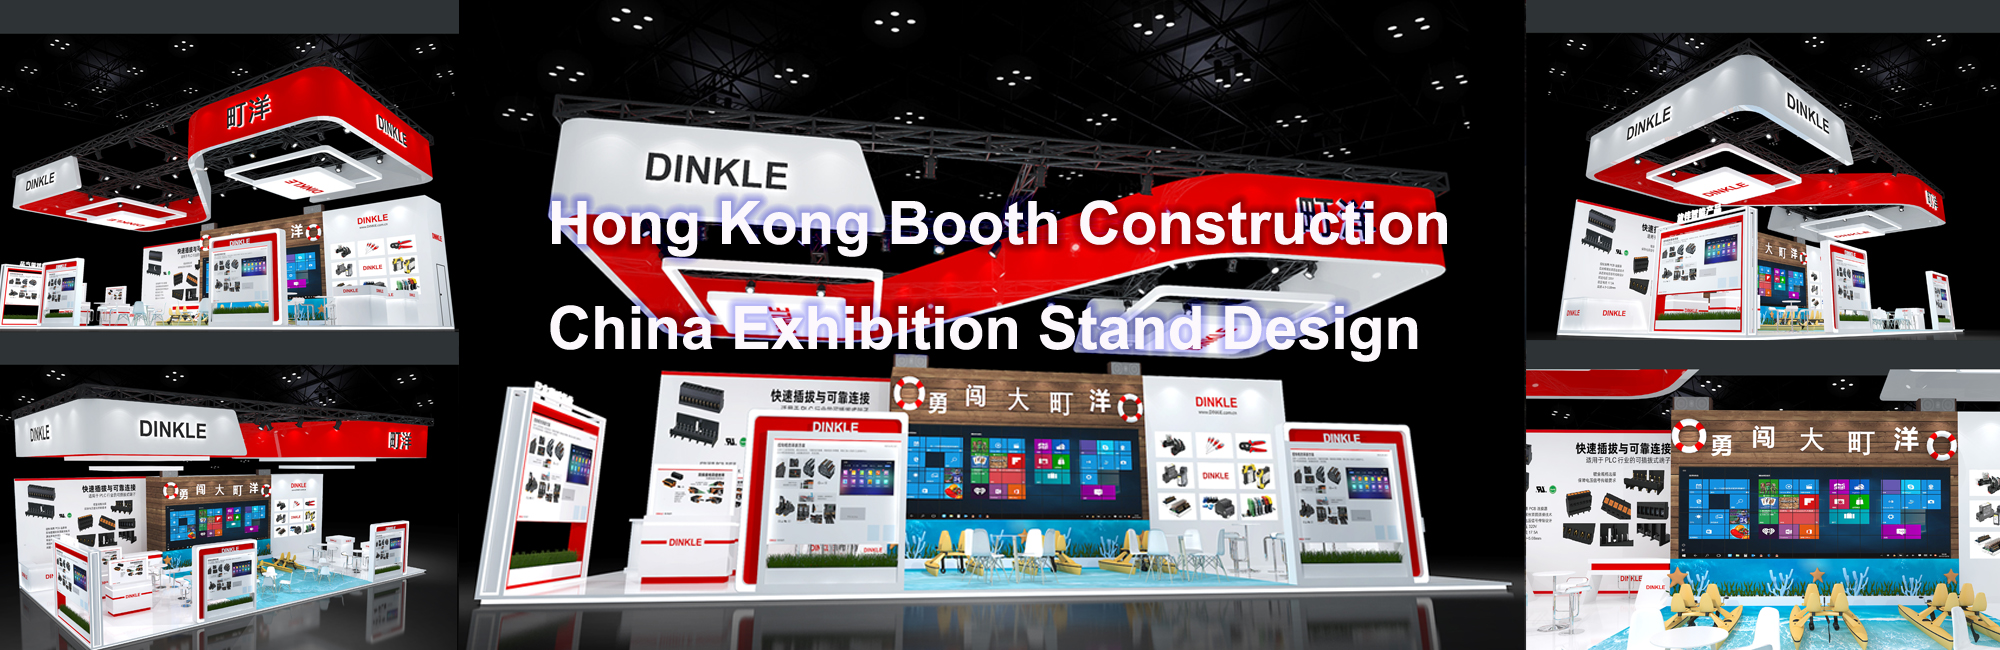 Hong Kong exhibition stand design